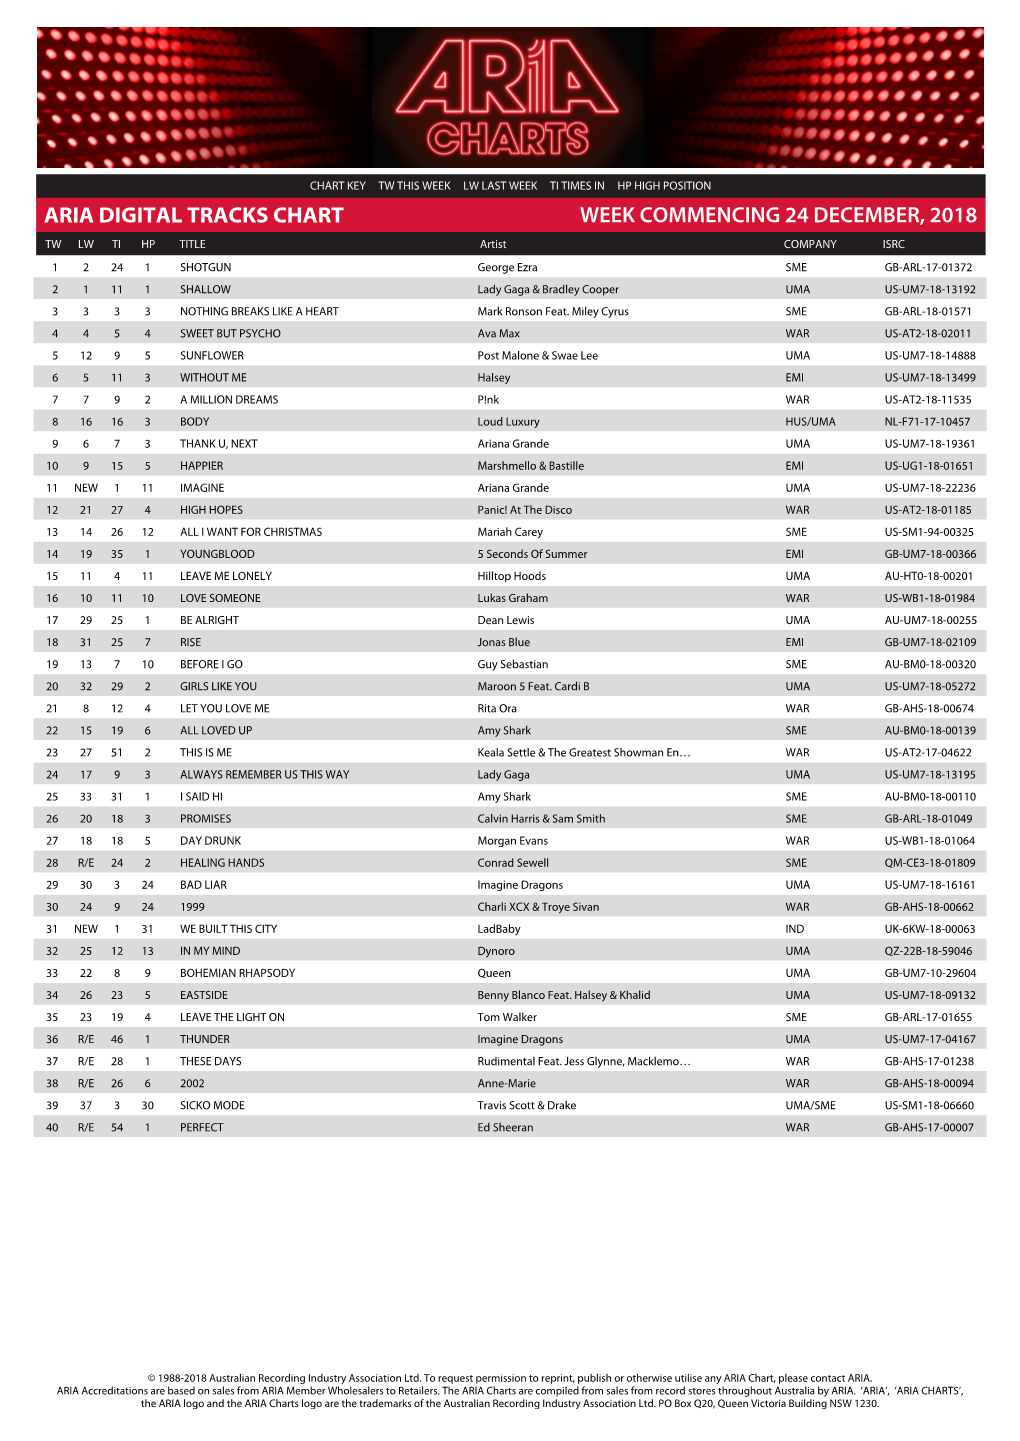 Aria Digital Tracks Chart Week Commencing 24